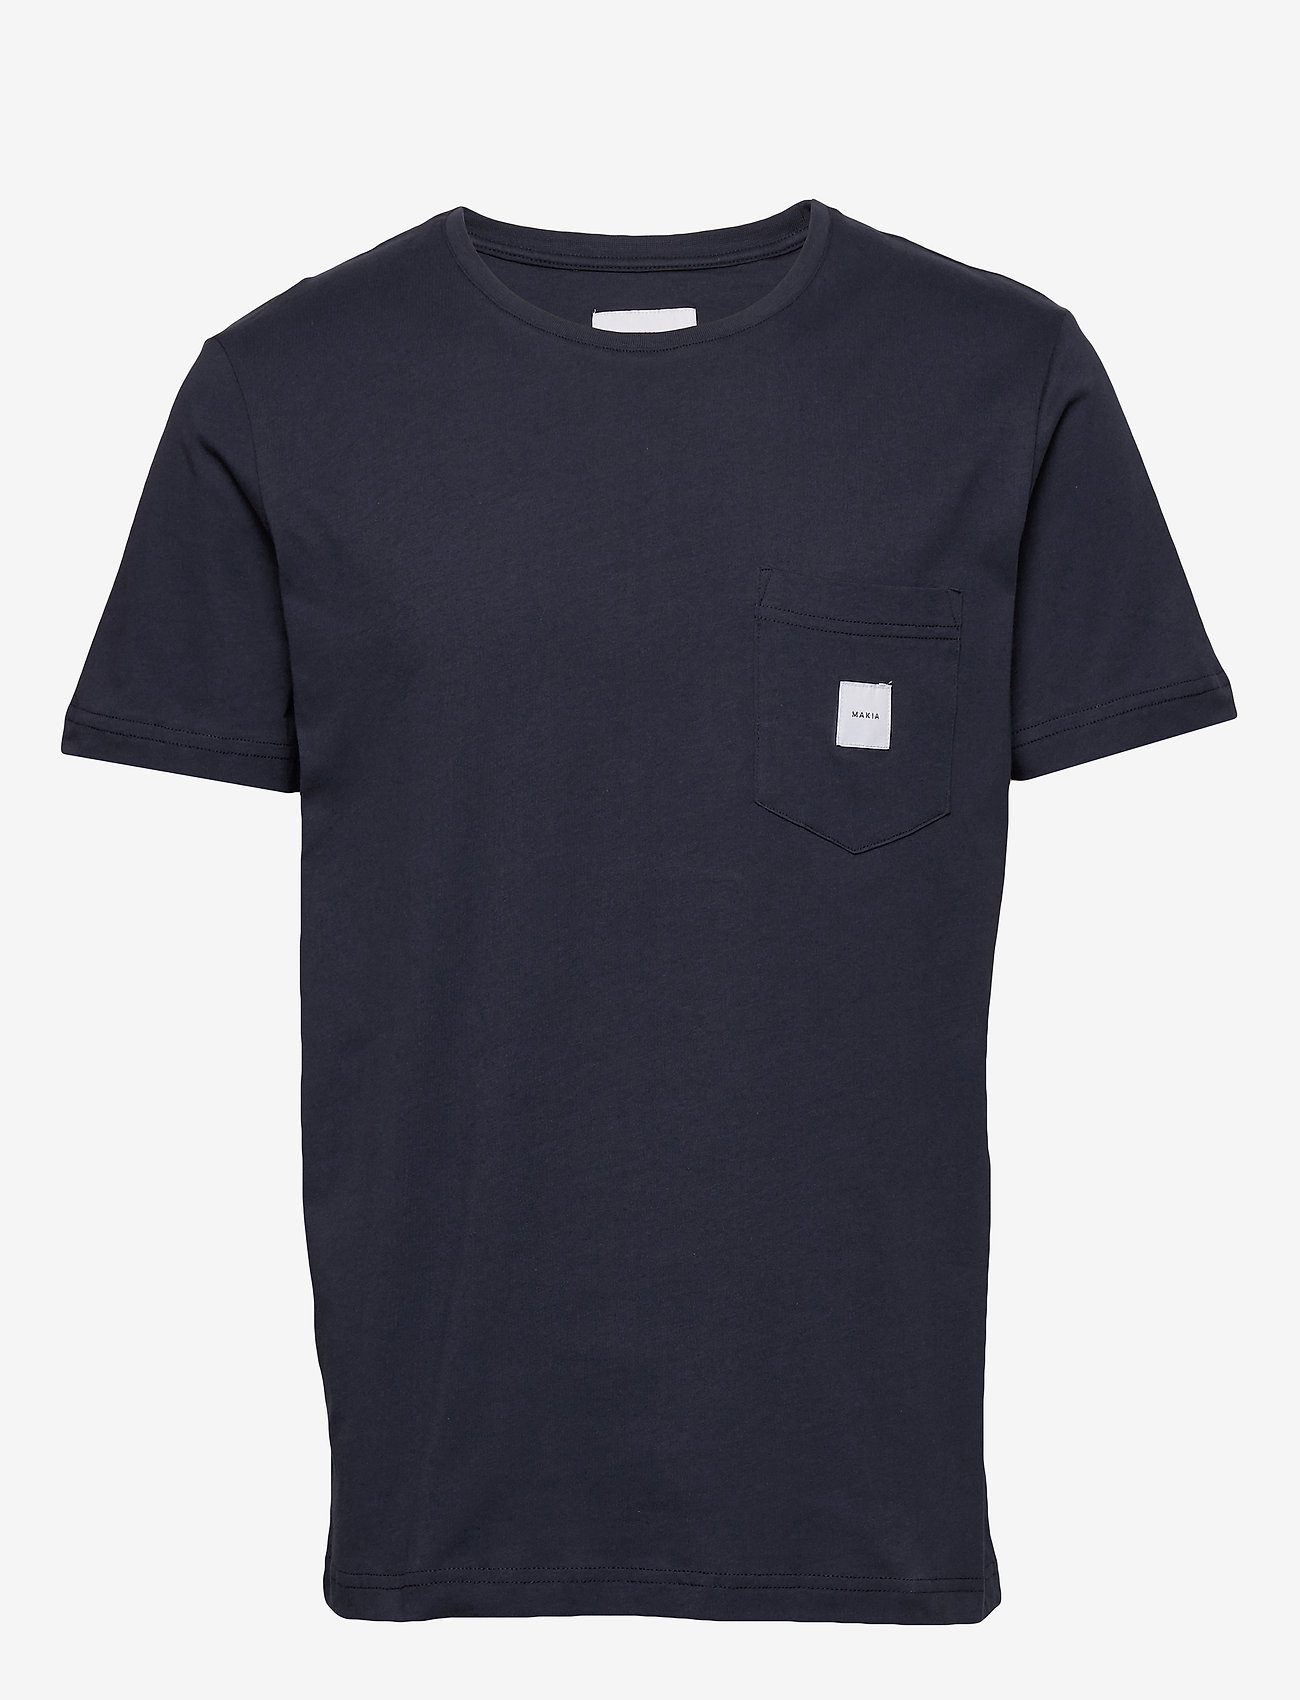 Makia - Square Pocket T-shirt - t-shirts - dark blue - 0